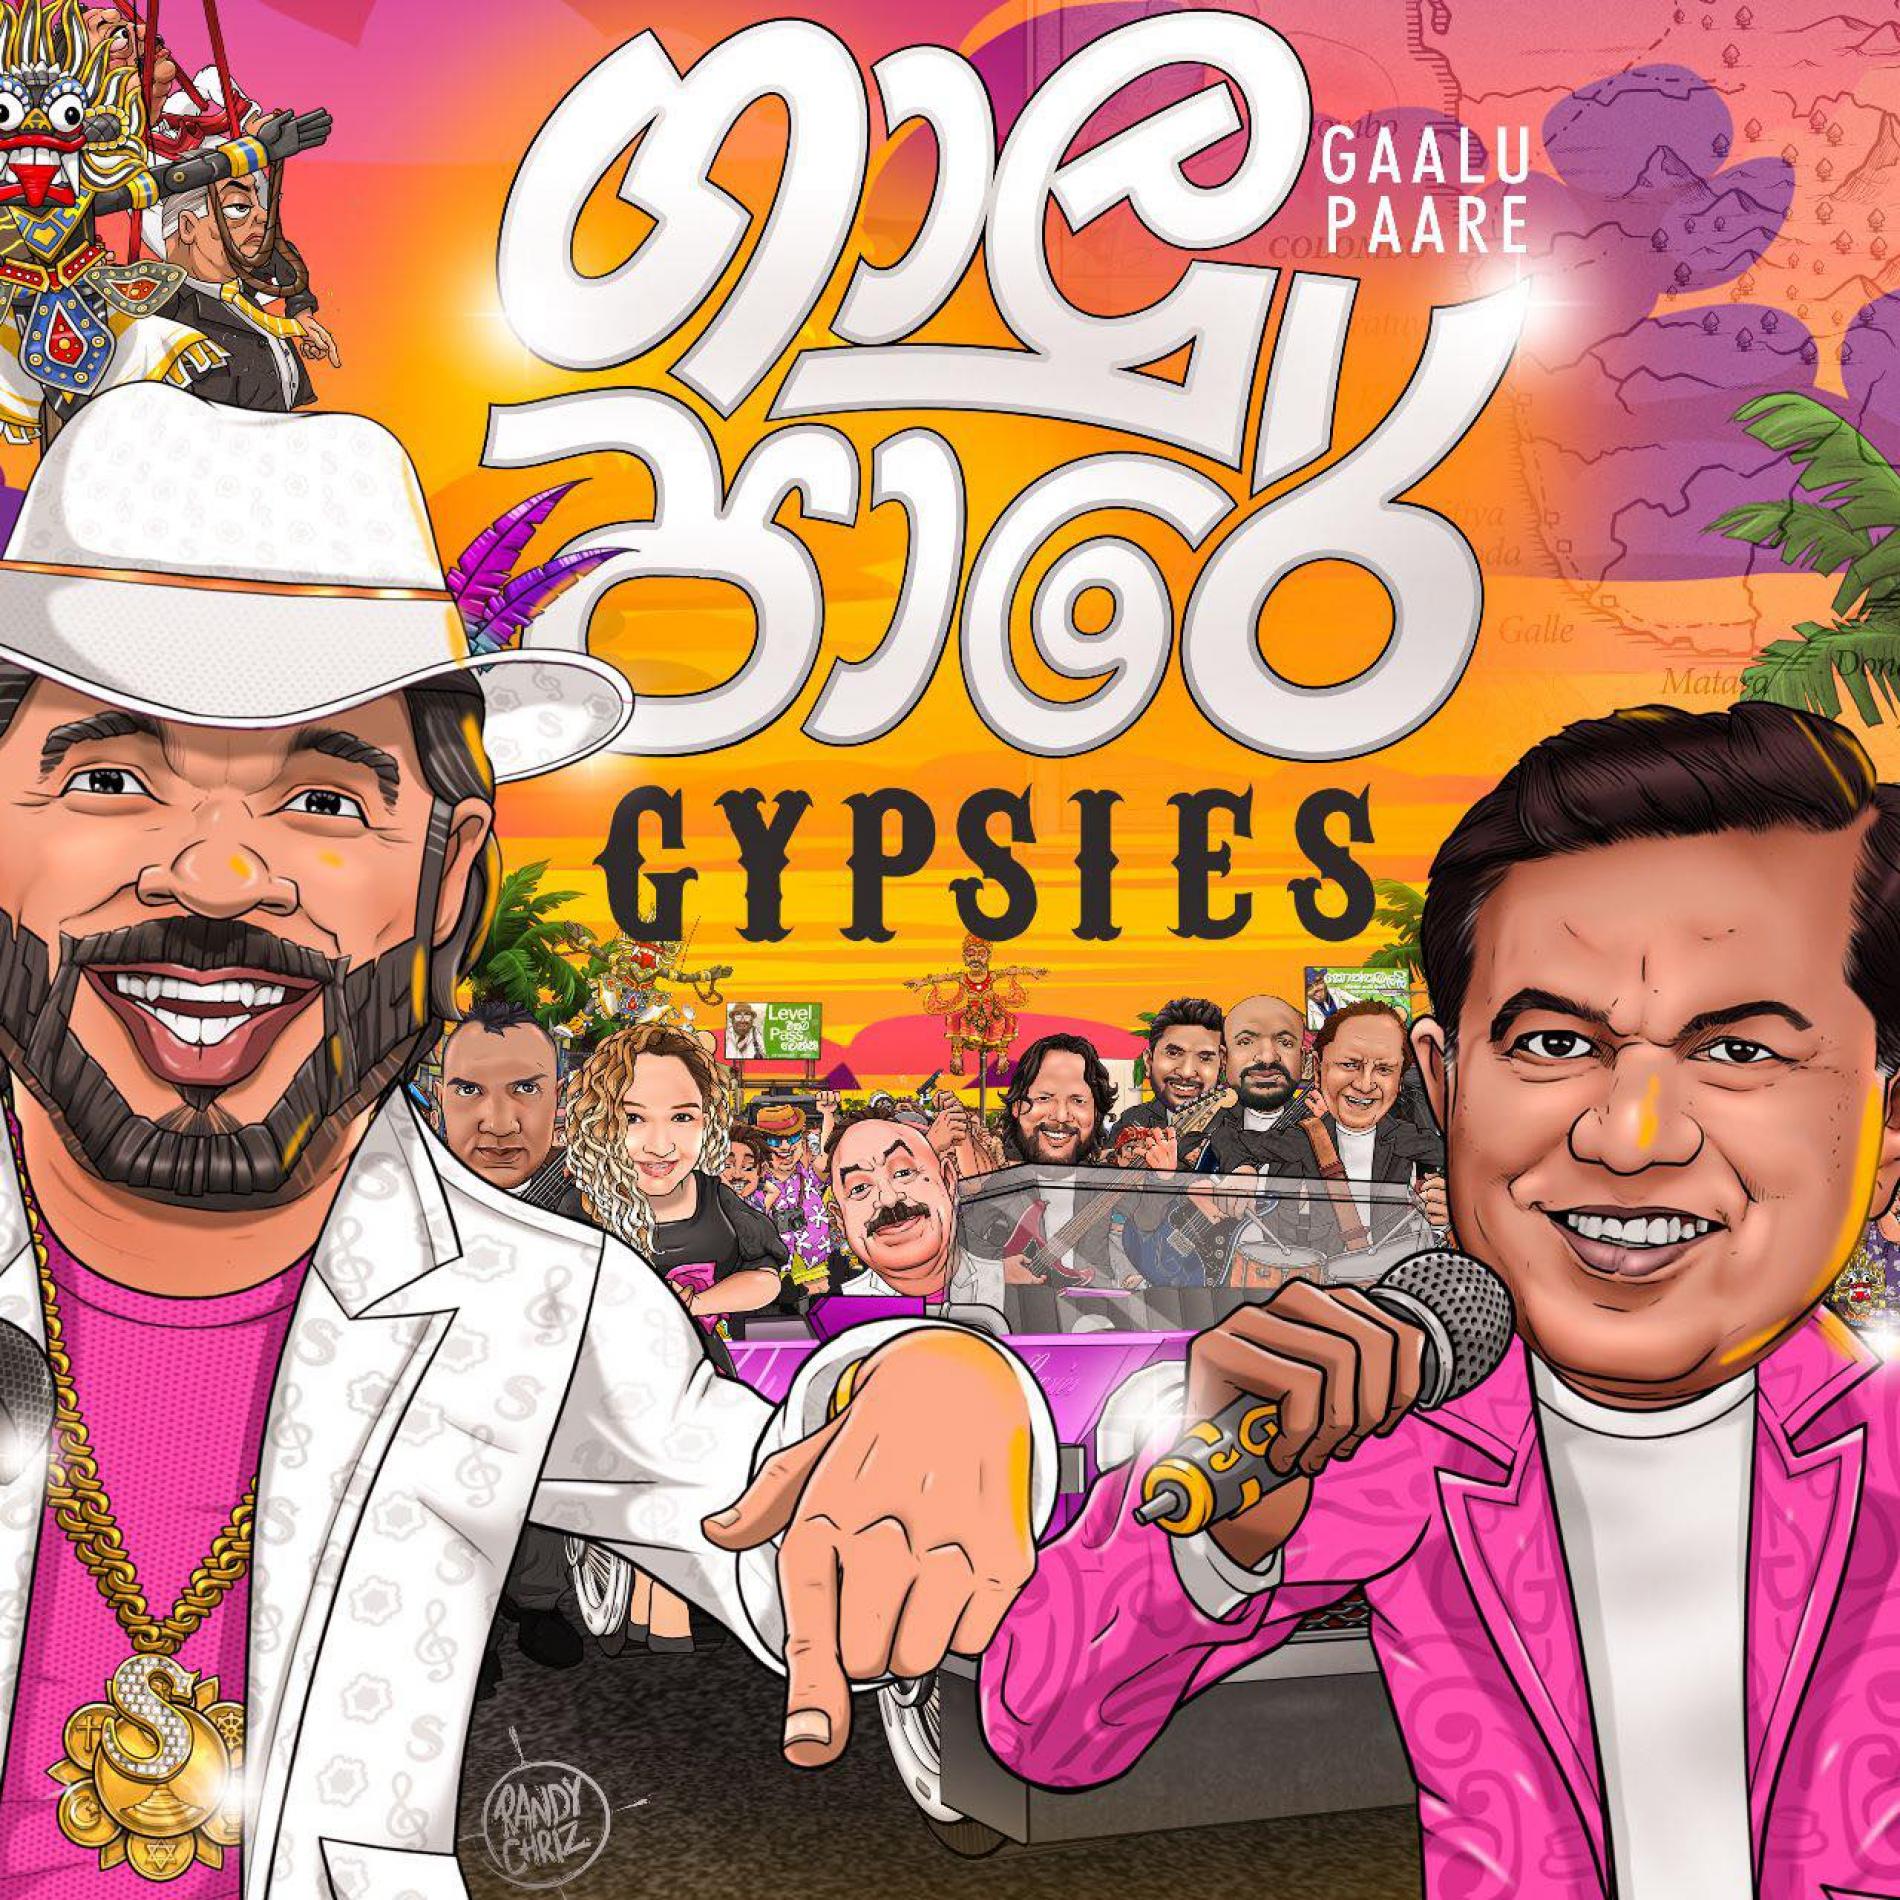 Gaalu Paare ගාලු පාරේ by Sunil & Piyal with Gypsies | The Song & Exclusives With Mr. Piyal, Randy Chriz & Team Meraki